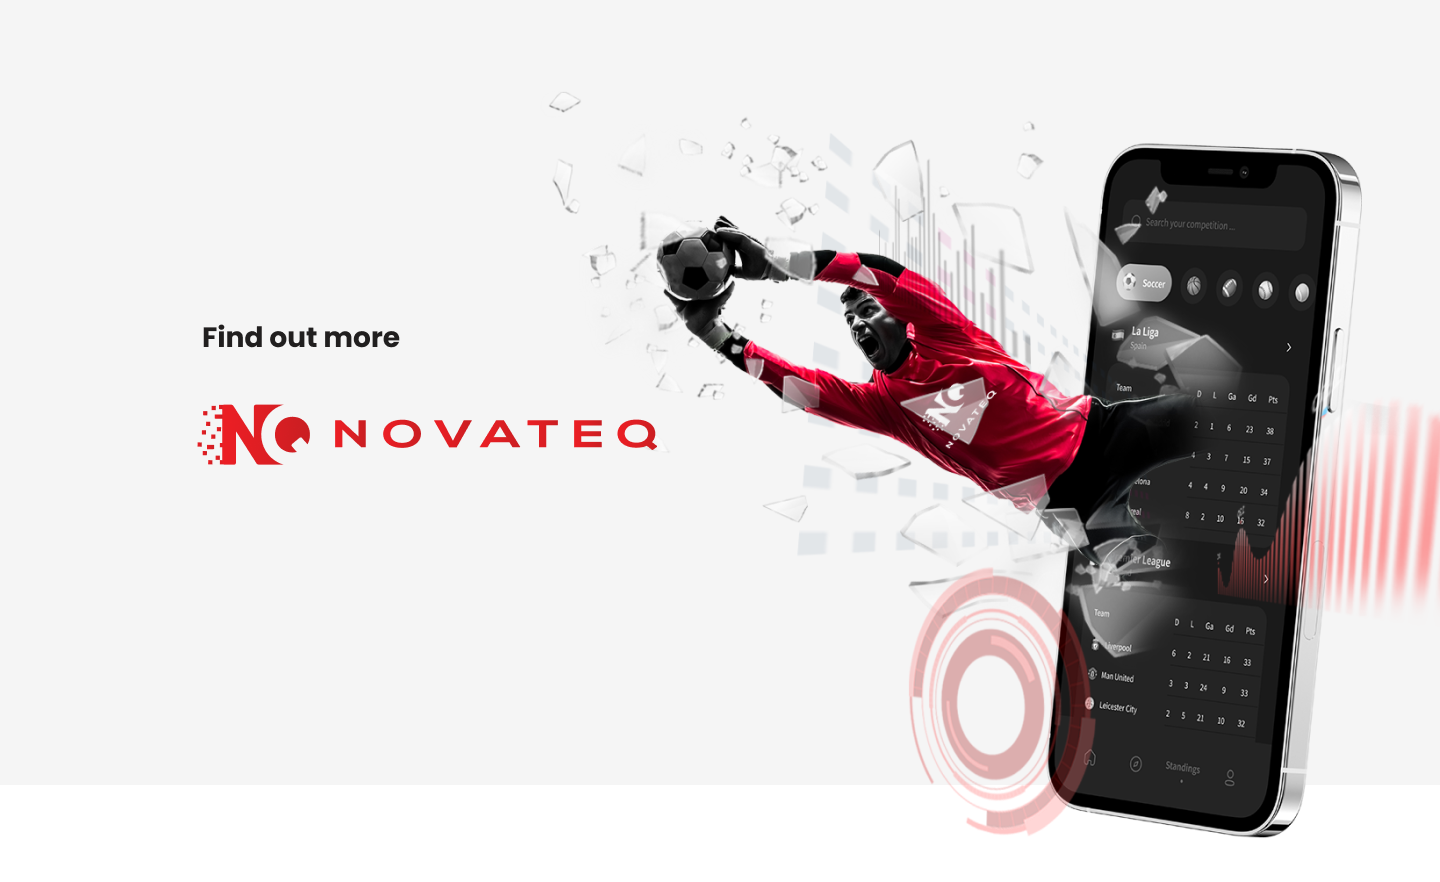 Novateq global leading sportsbook and casino provider